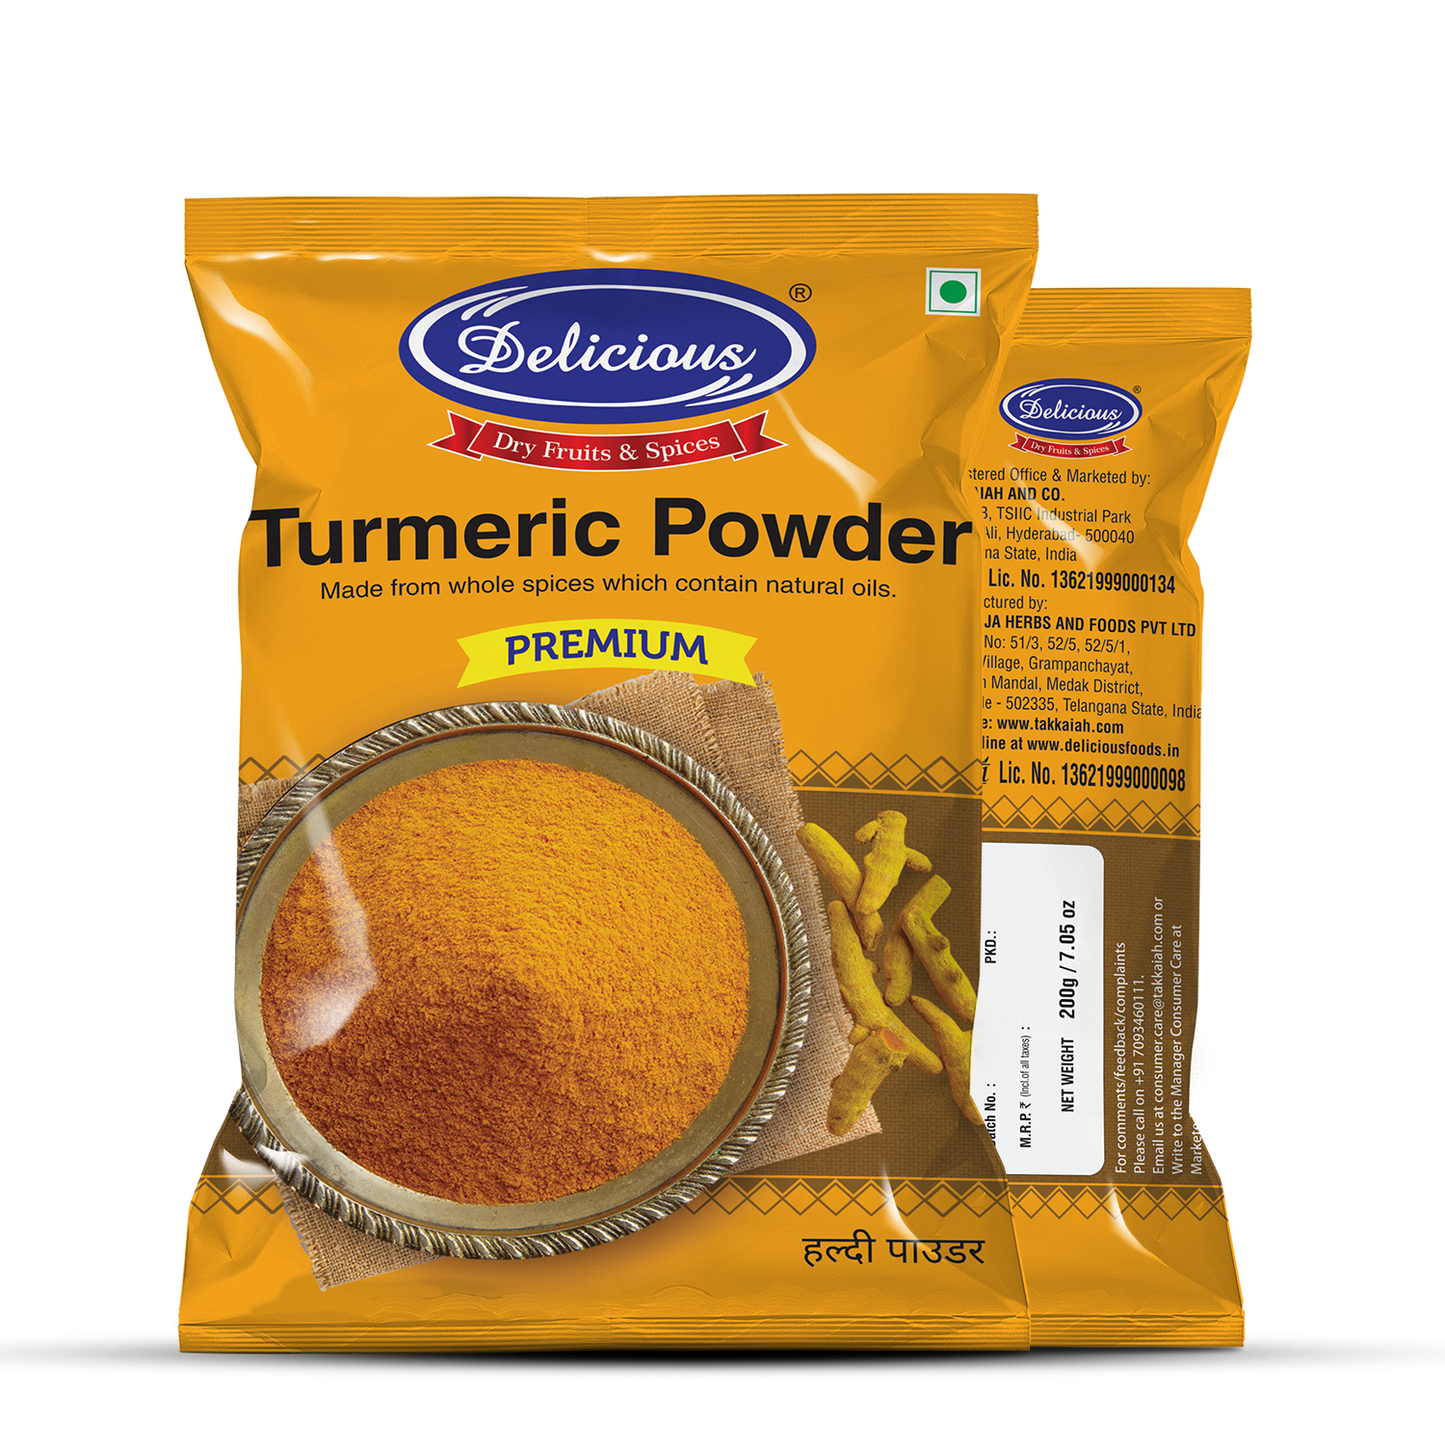 Delicious Turmeric Powder